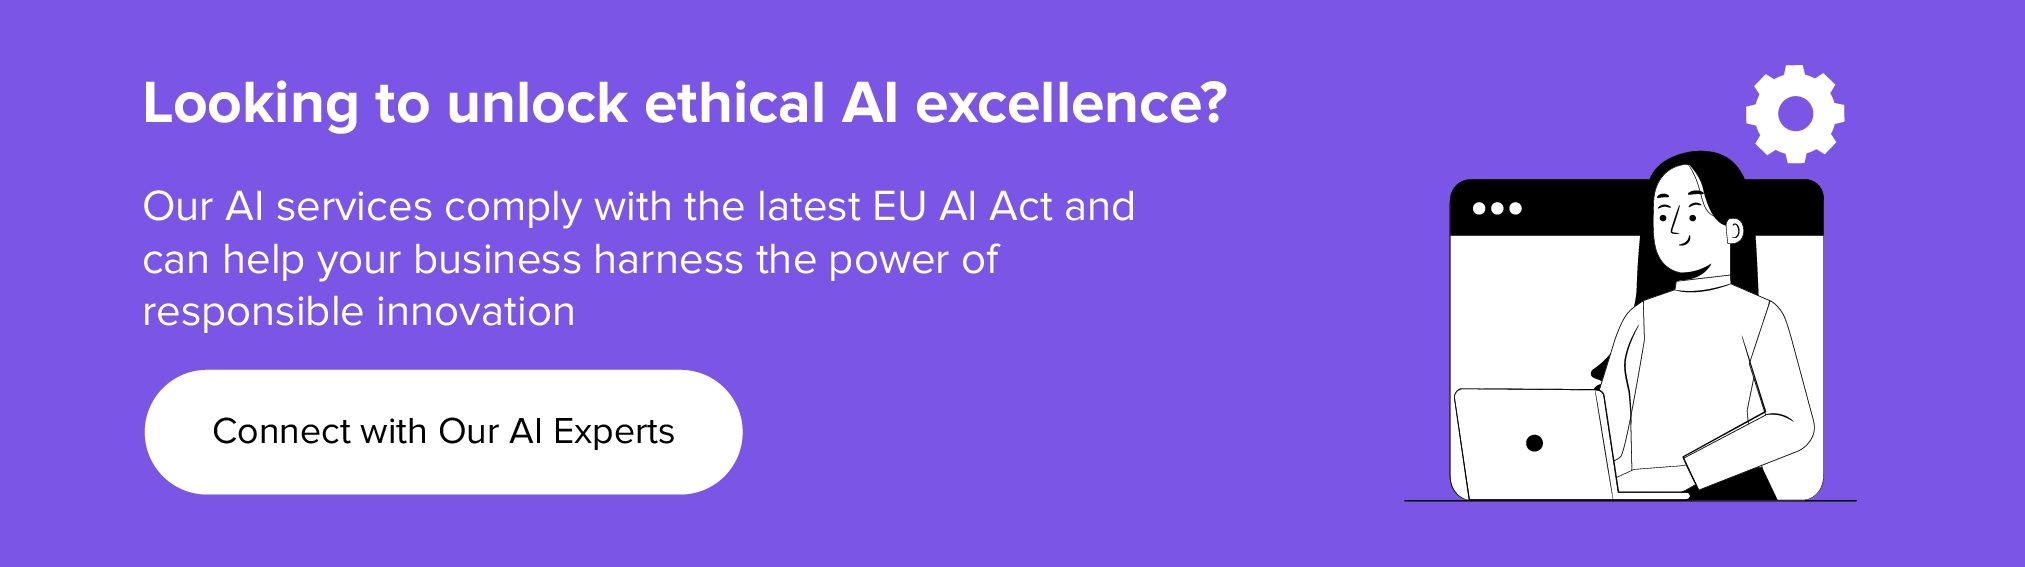 berkolaborasi dengan kami untuk mewujudkan keunggulan AI yang etis